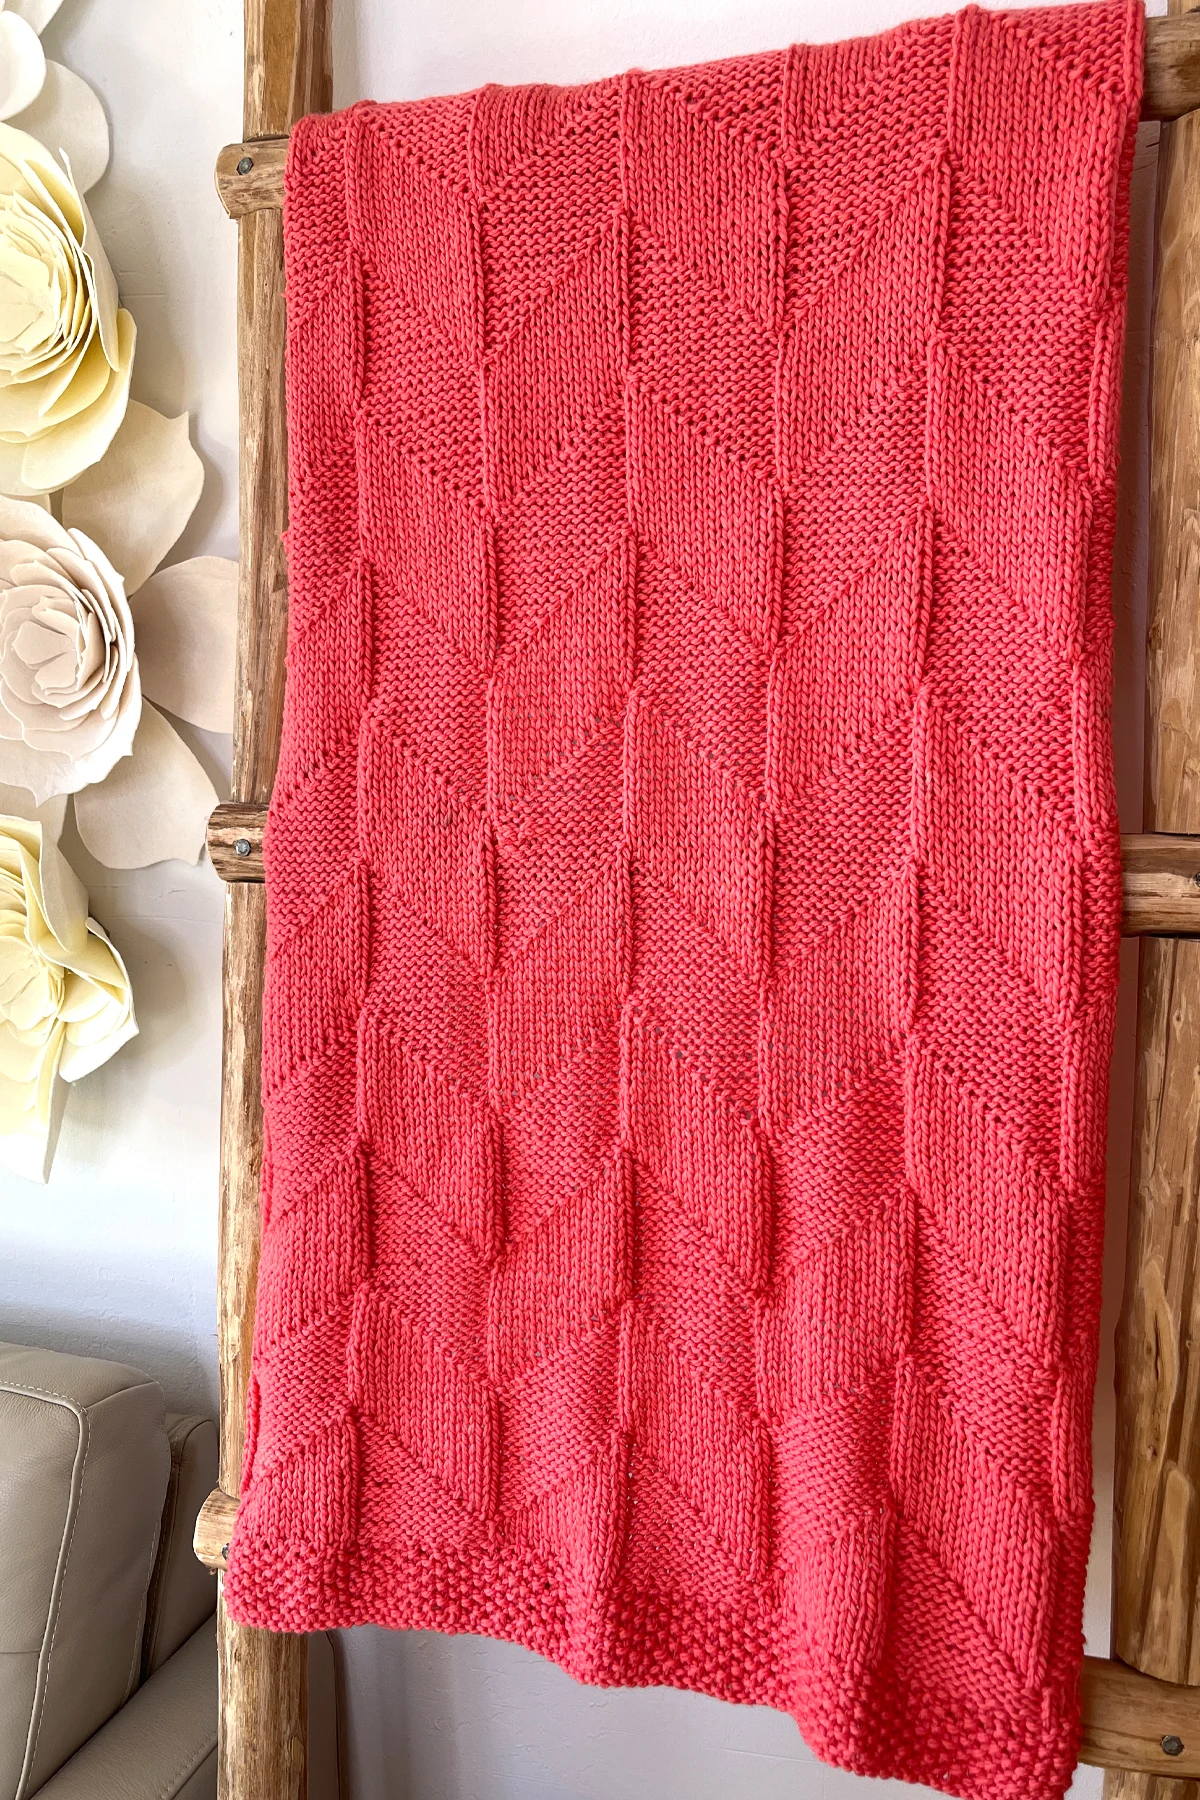 Parallelogram Blanket in coral colored yarn displayed on wooden ladder.